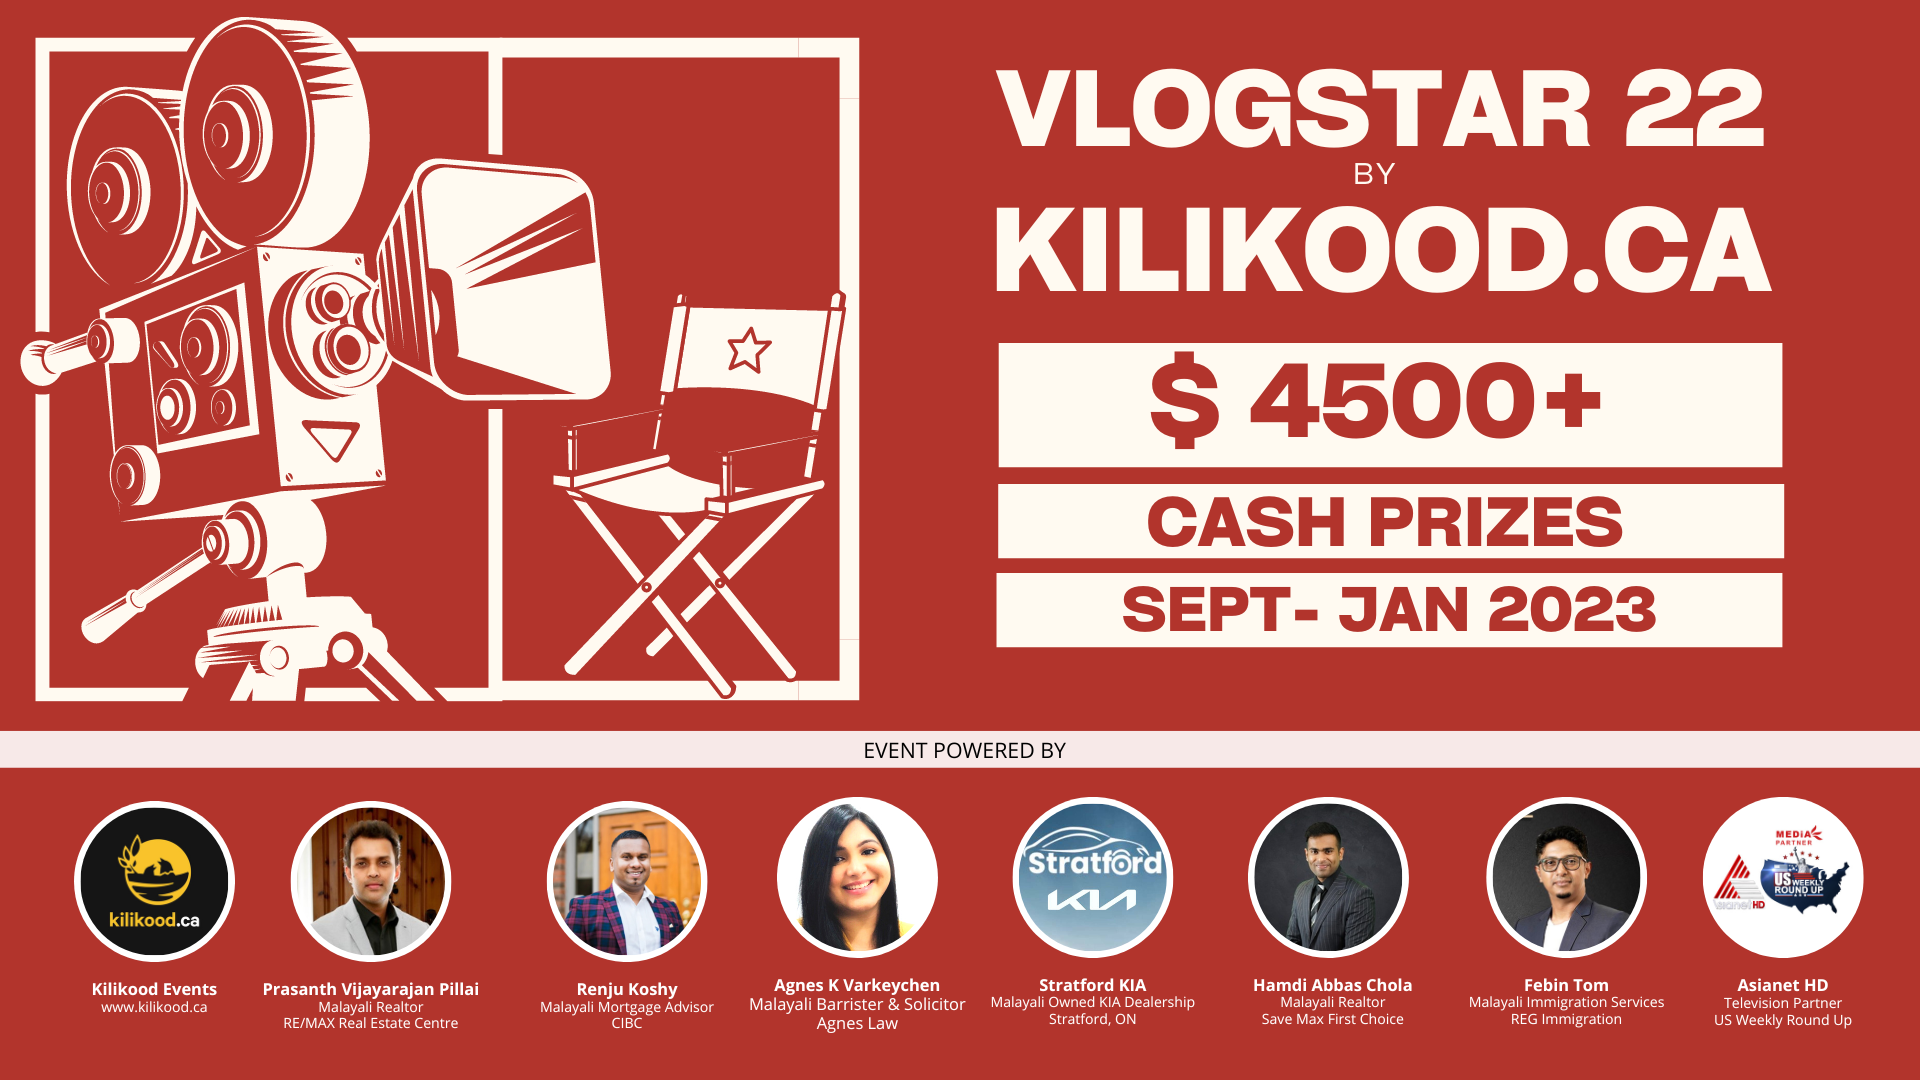 Kilikood.ca Presents VlogStar 2022